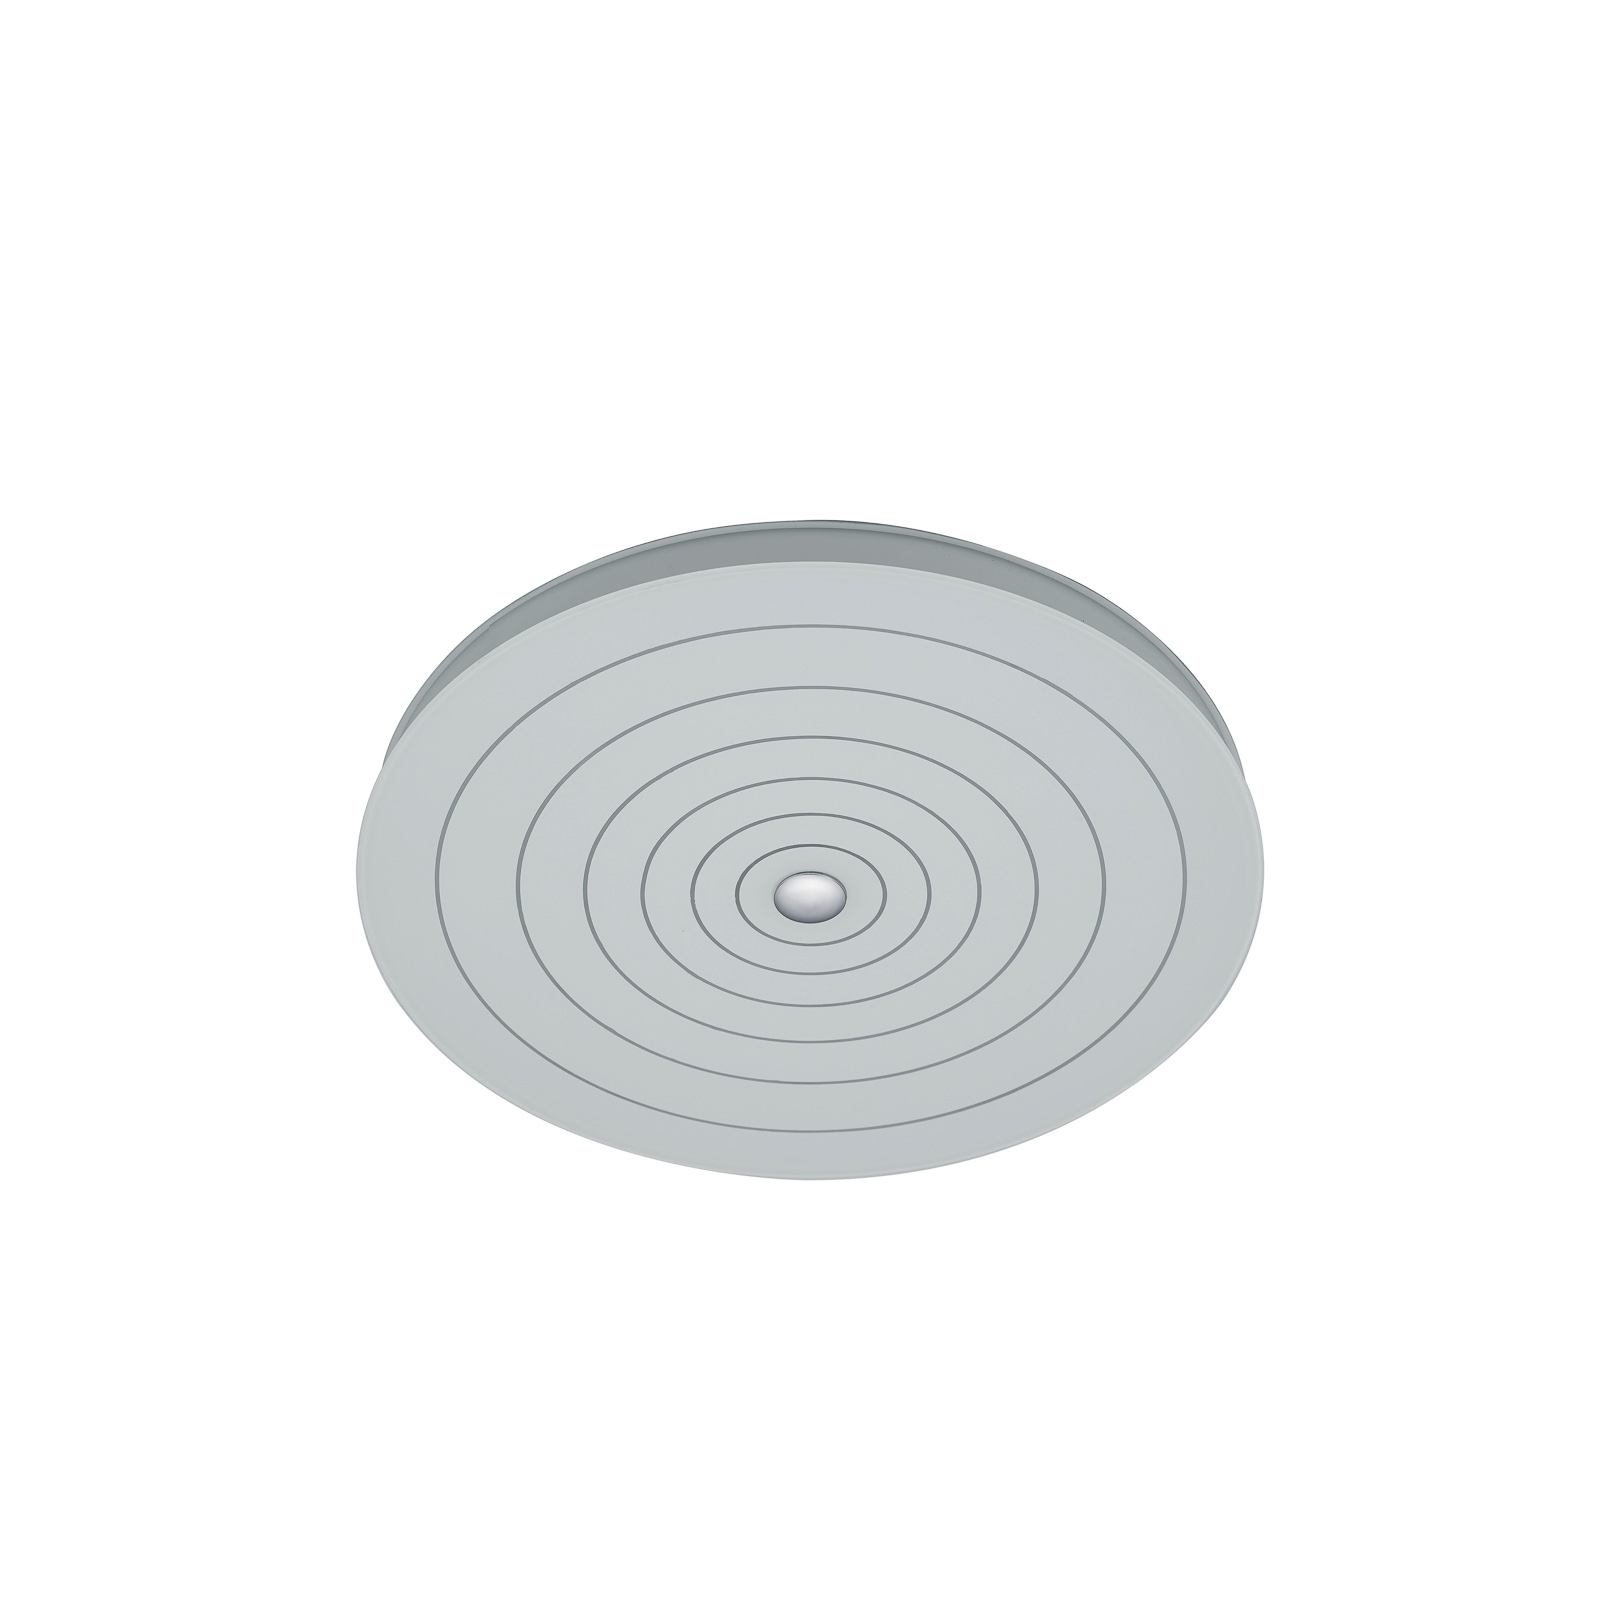 BANKAMP Mandala LED-Deckenleuchte Kreise, Ø 42 cm